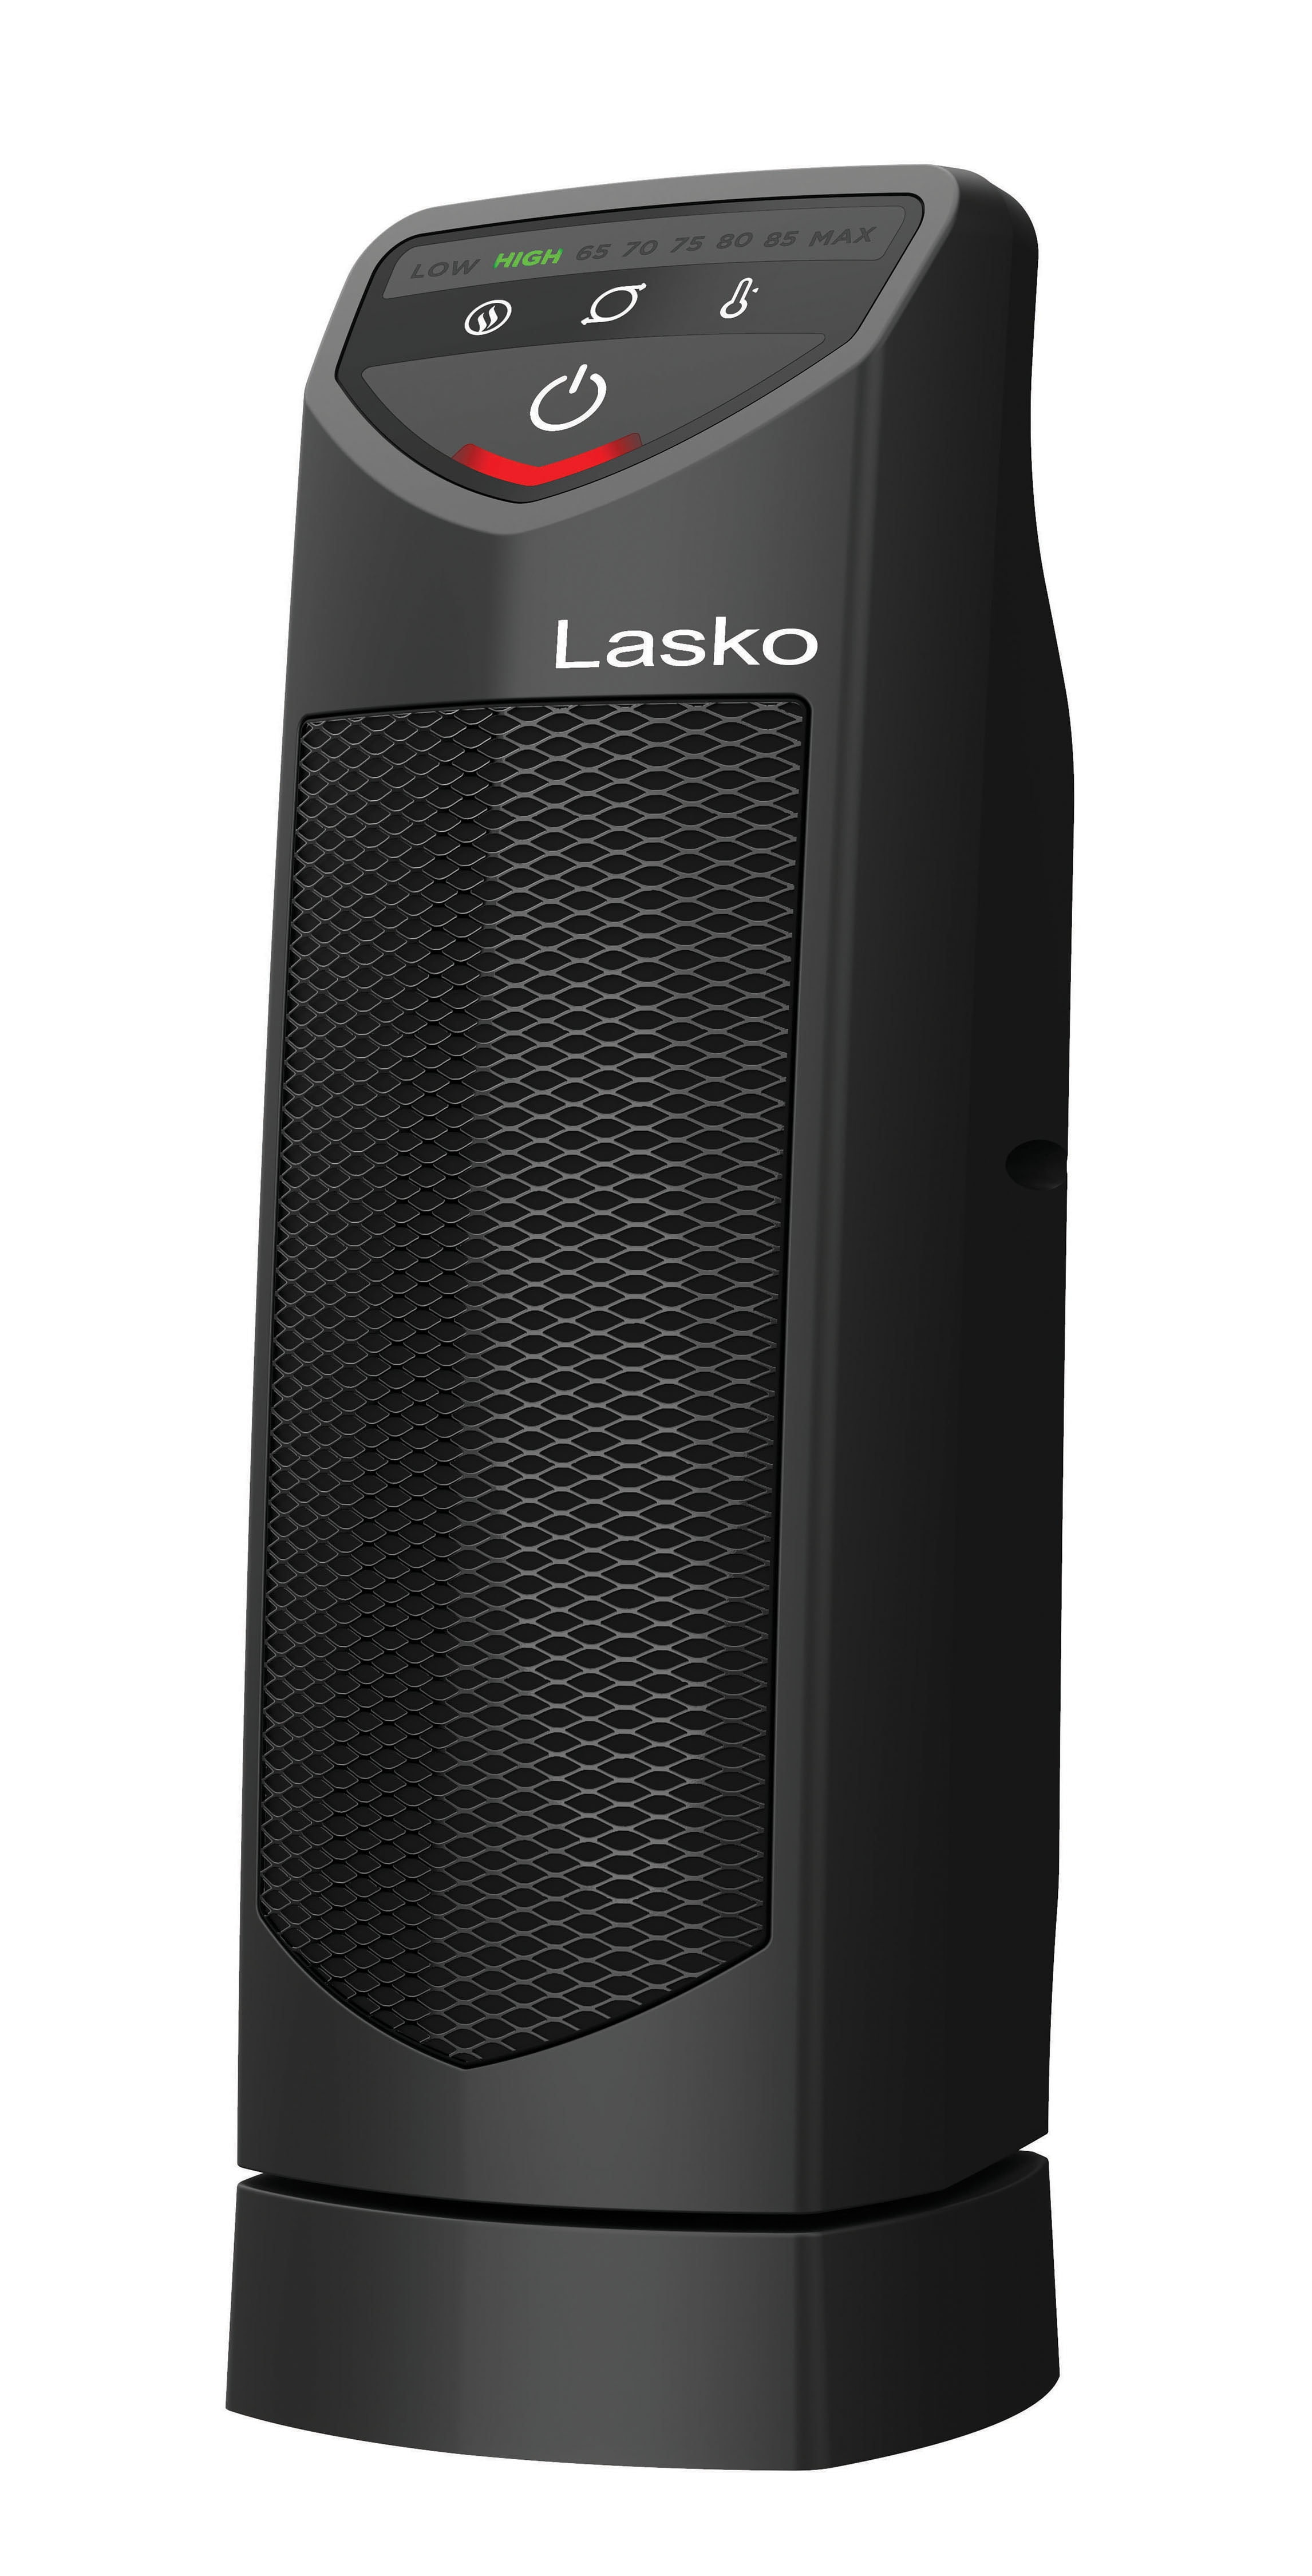 Lasko 1500W 14" Personal Oscillating Ceramic Electric Tower Space Heater, CT14320, Black